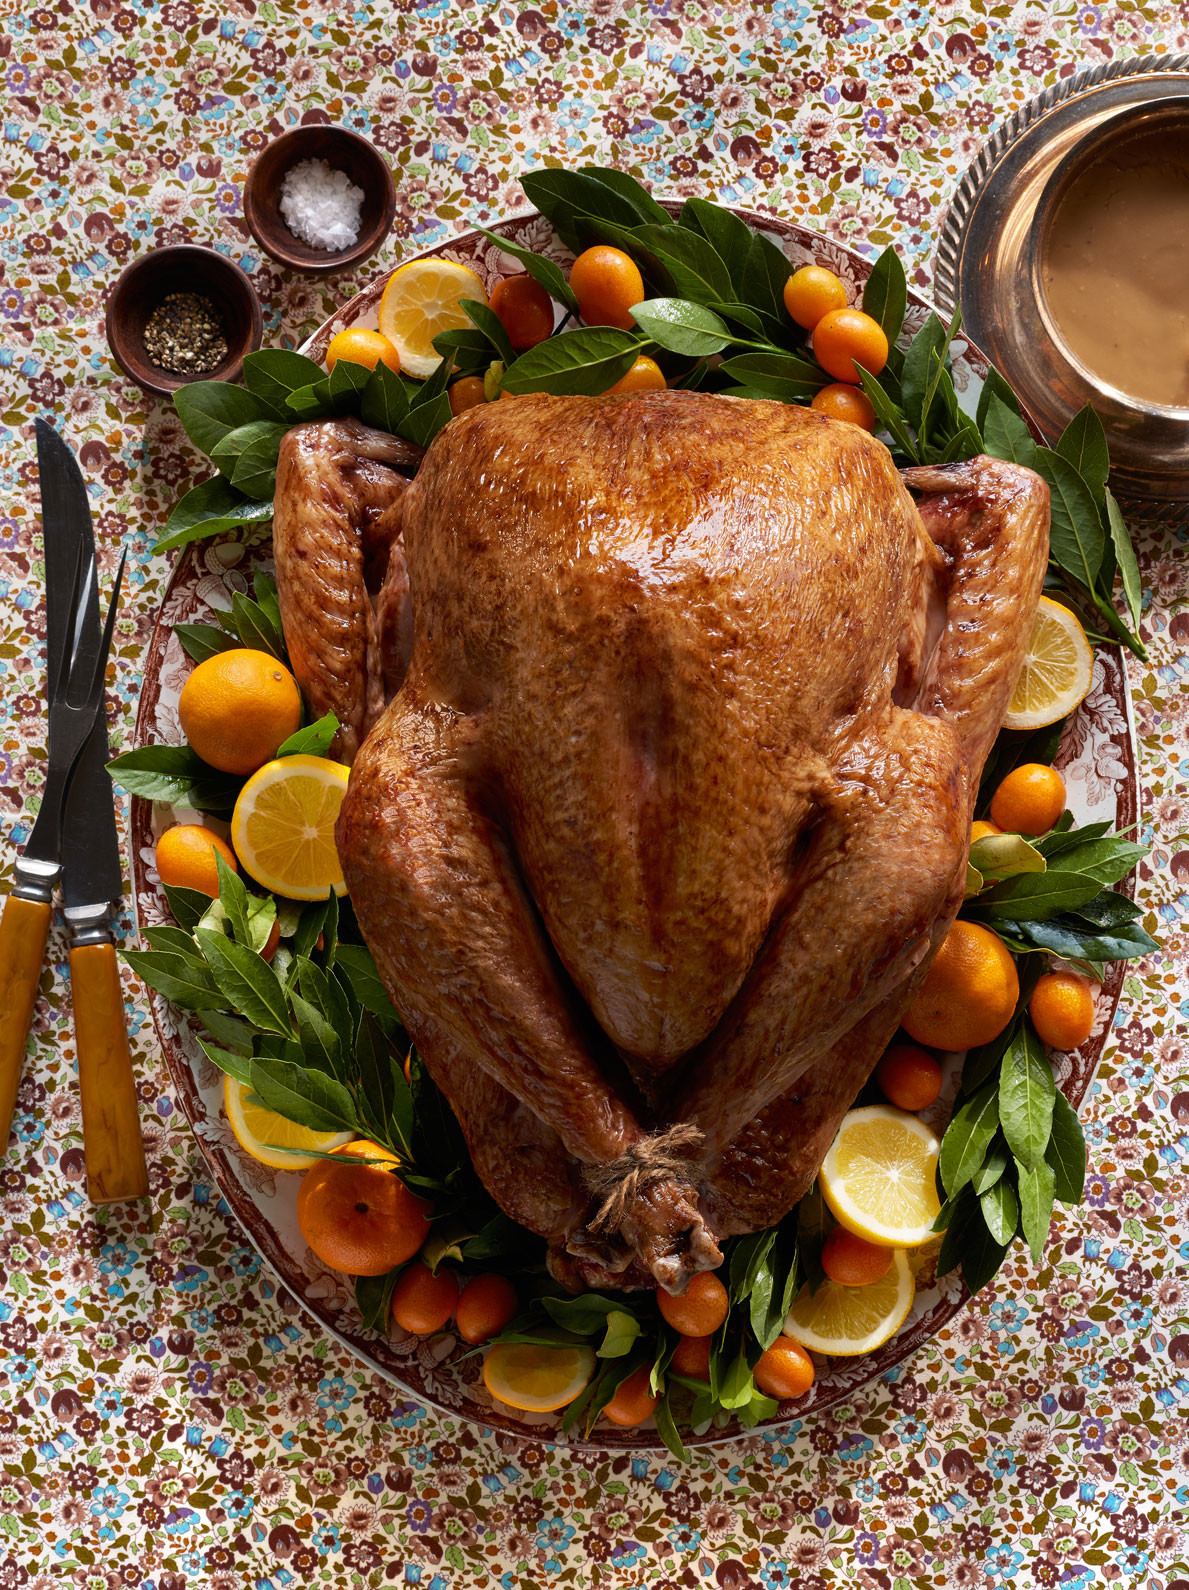 Thanksgiving Pictures Turkey
 25 Best Thanksgiving Turkey Recipes How To Cook Turkey